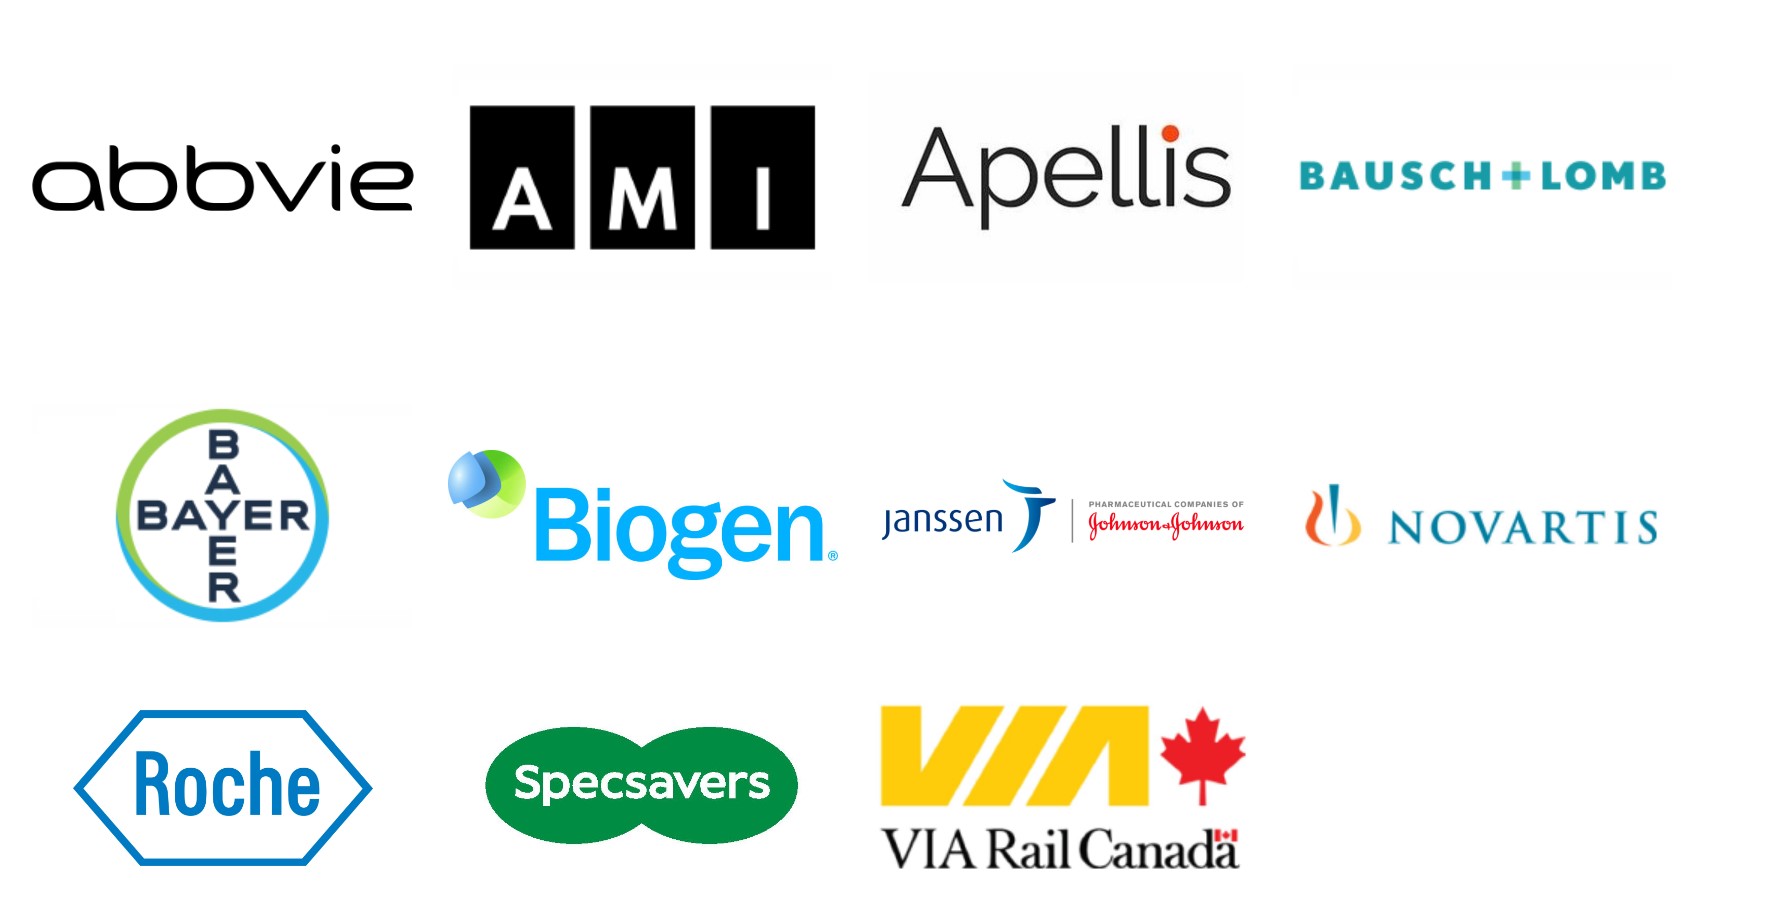 Canadian Council of the Blind Sponsors' Logos [Abbvie, AMI, Apellis, Bausch+Lomb, Bayer, Biogen, Janssen (Johnson & Johnson), Novartis, Roche, Specsavers, VIA-Rail]